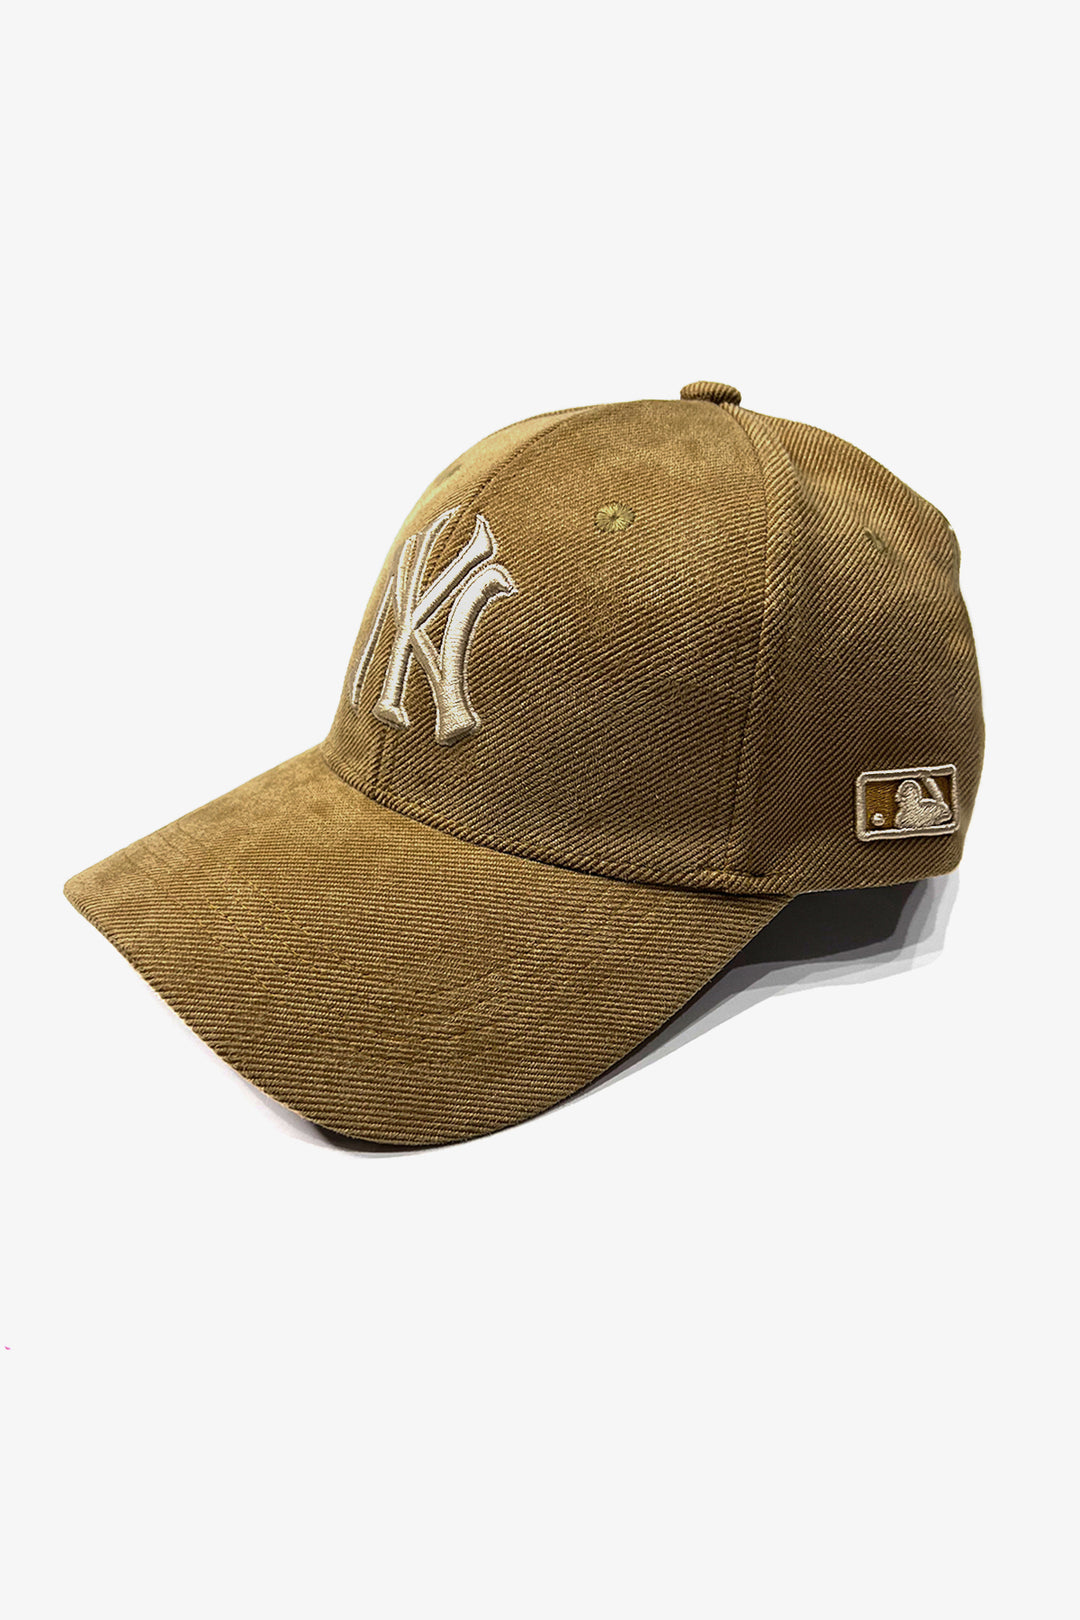 NY Classic Brown Baseball Cap - A23 - MCP077R